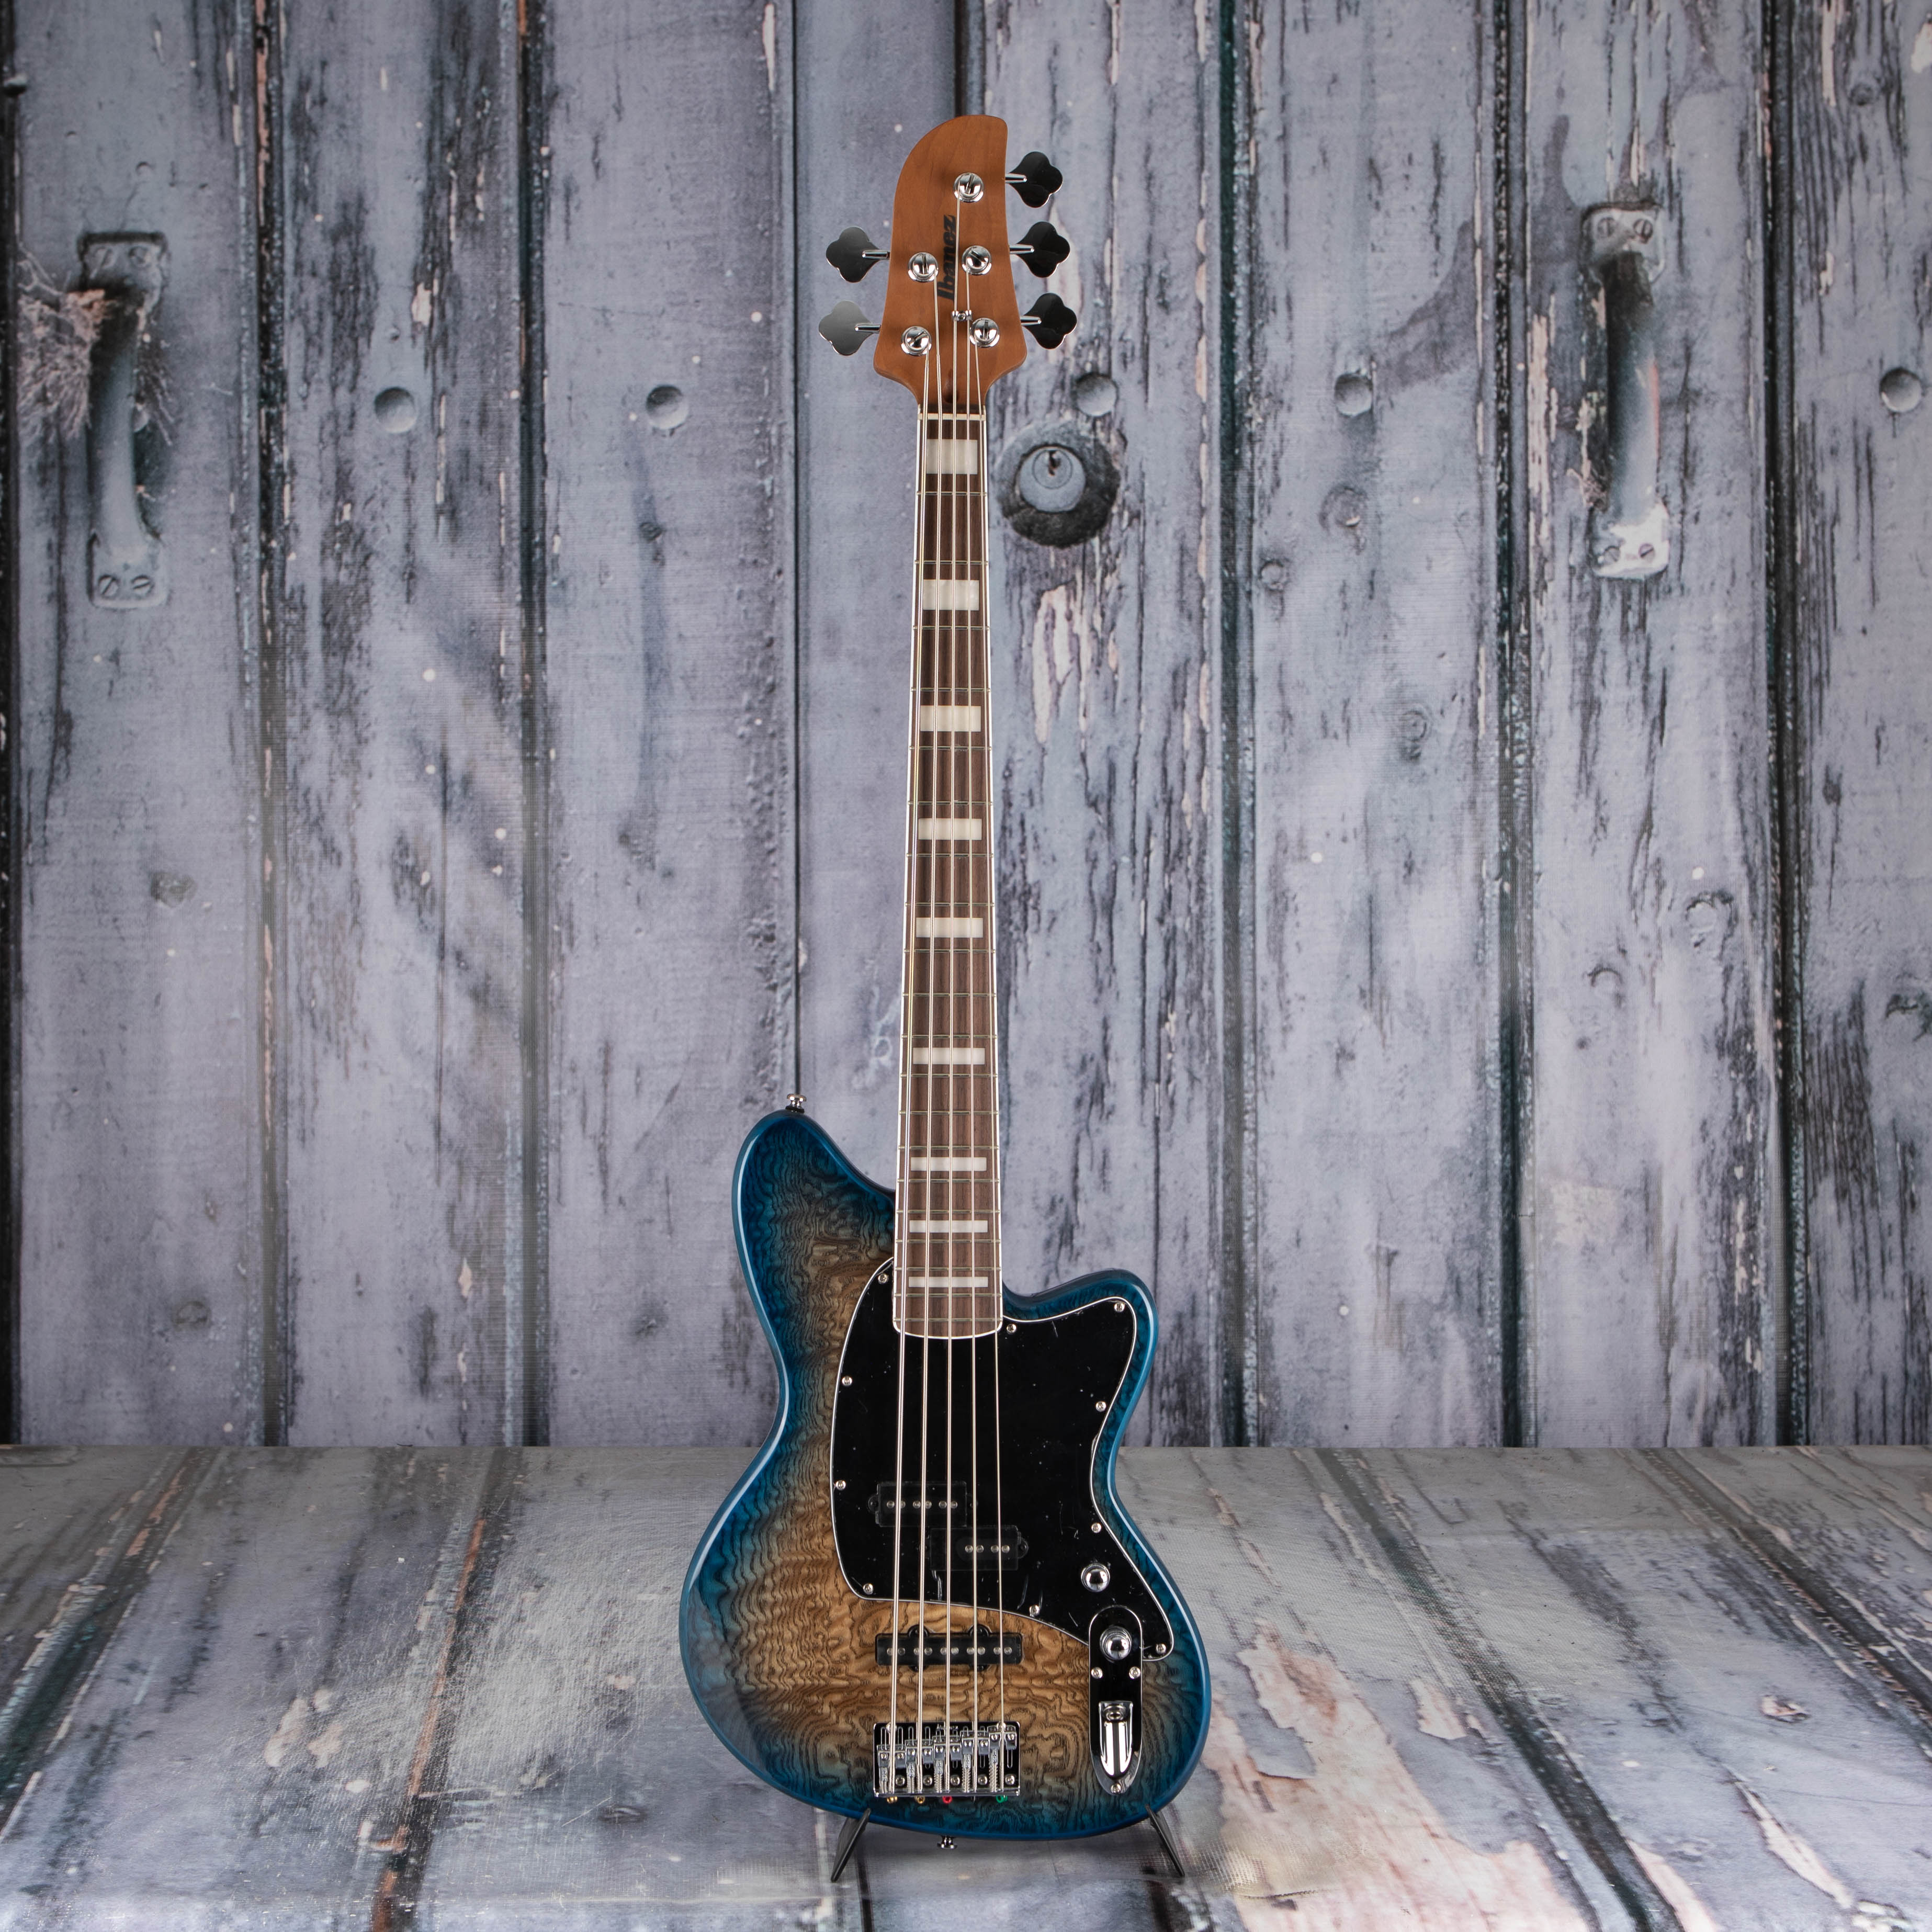 Ibanez Talman TMB405TA 5-String Electric Bass Guitar, Cosmic Blue Starburst, front